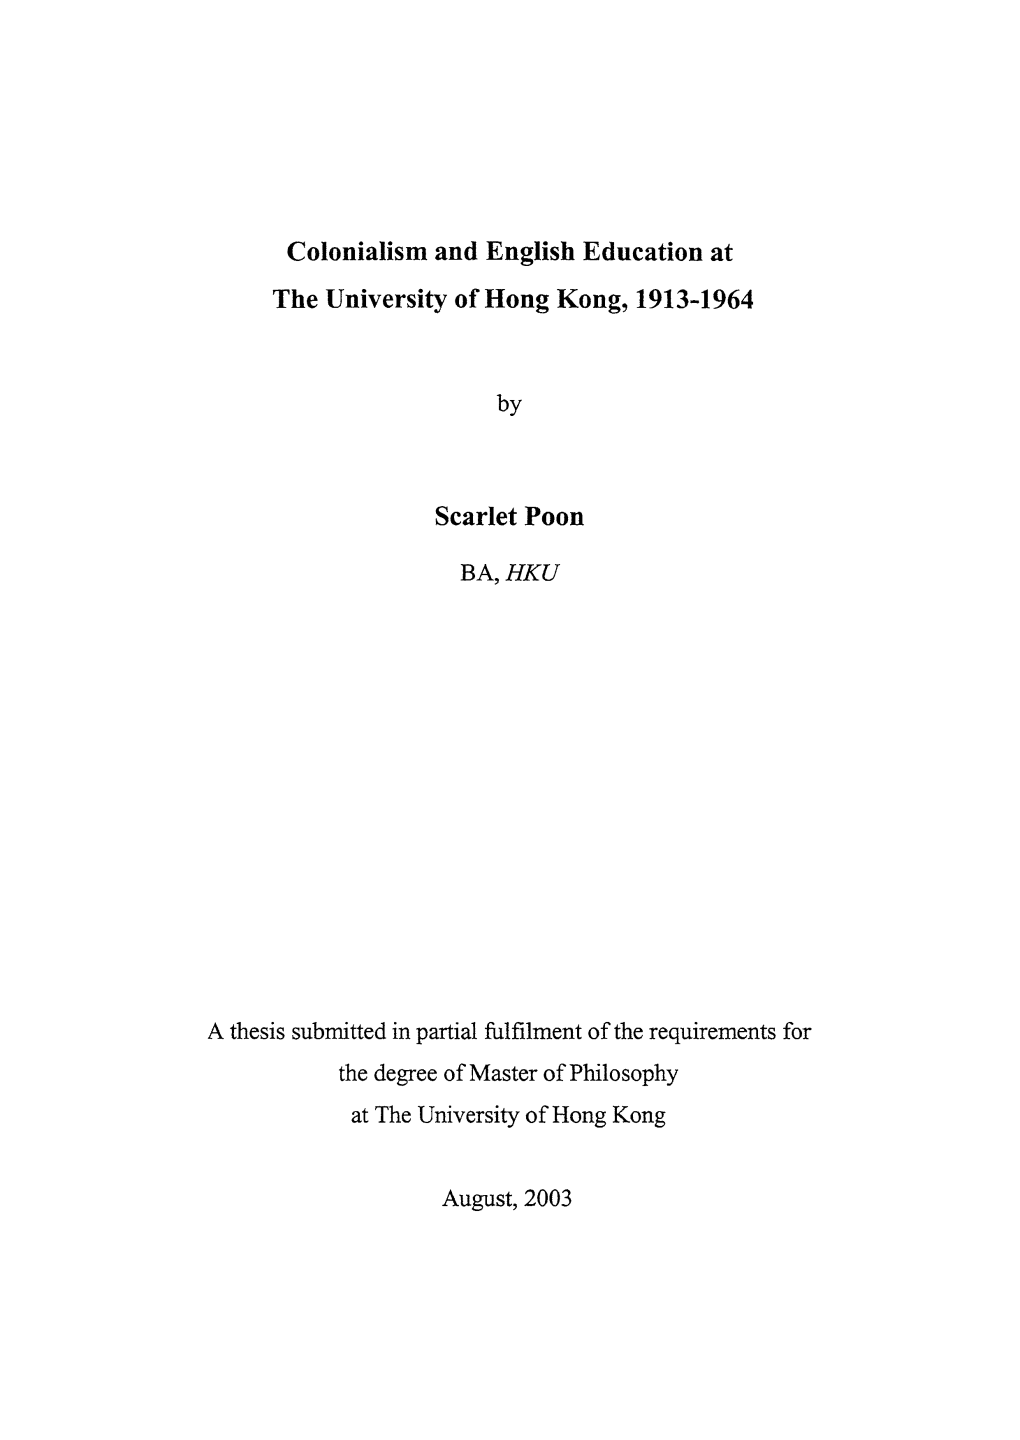 Colonialism and English Education at the University of Hong Kong, 1913-1964 Scarlet Poon